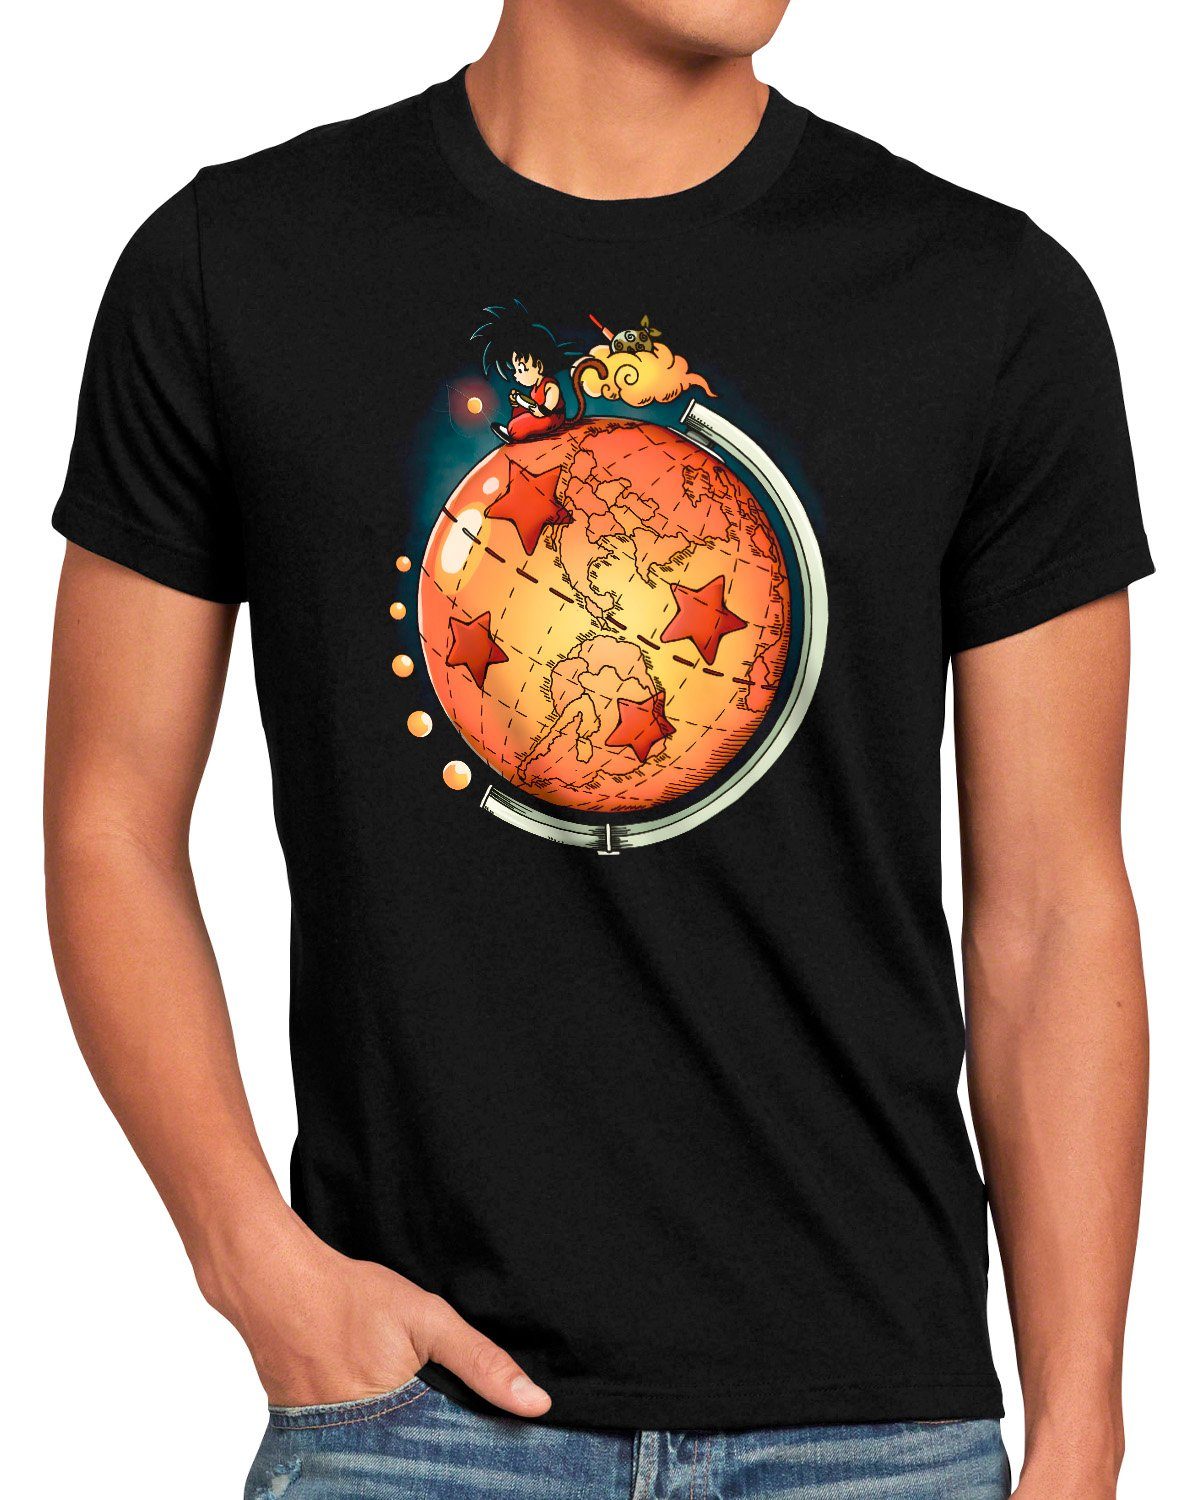 songoku dragonball z T-Shirt breakers gt kakarot Print-Shirt the Globe Saiyan style3 Herren super